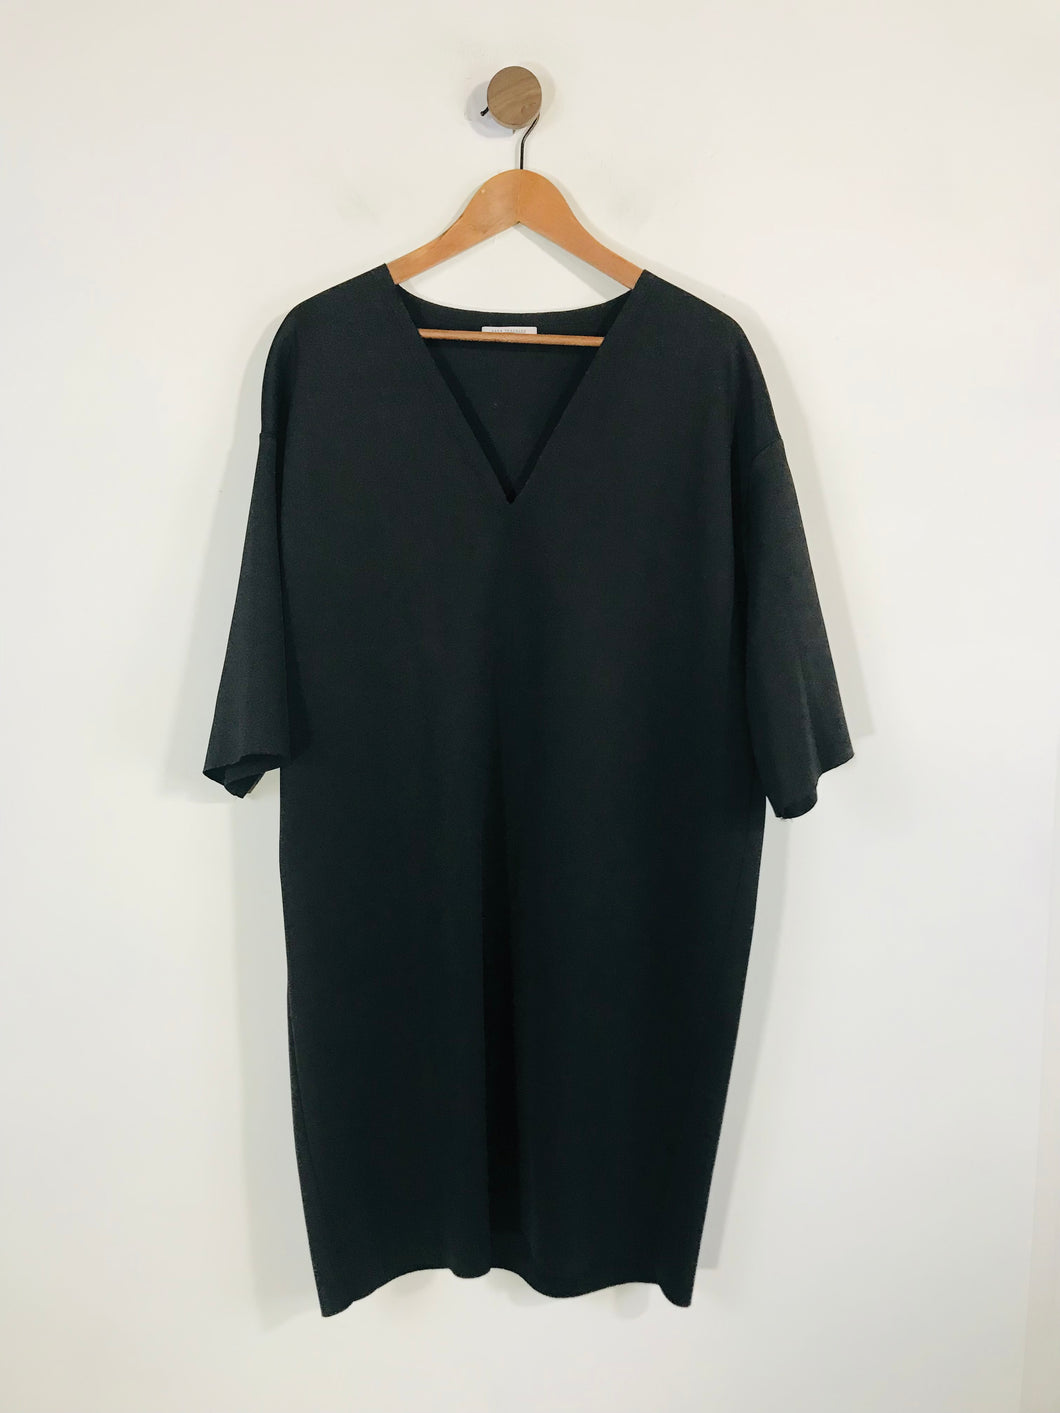 Zara Women's Shift Dress | M UK10-12 | Black